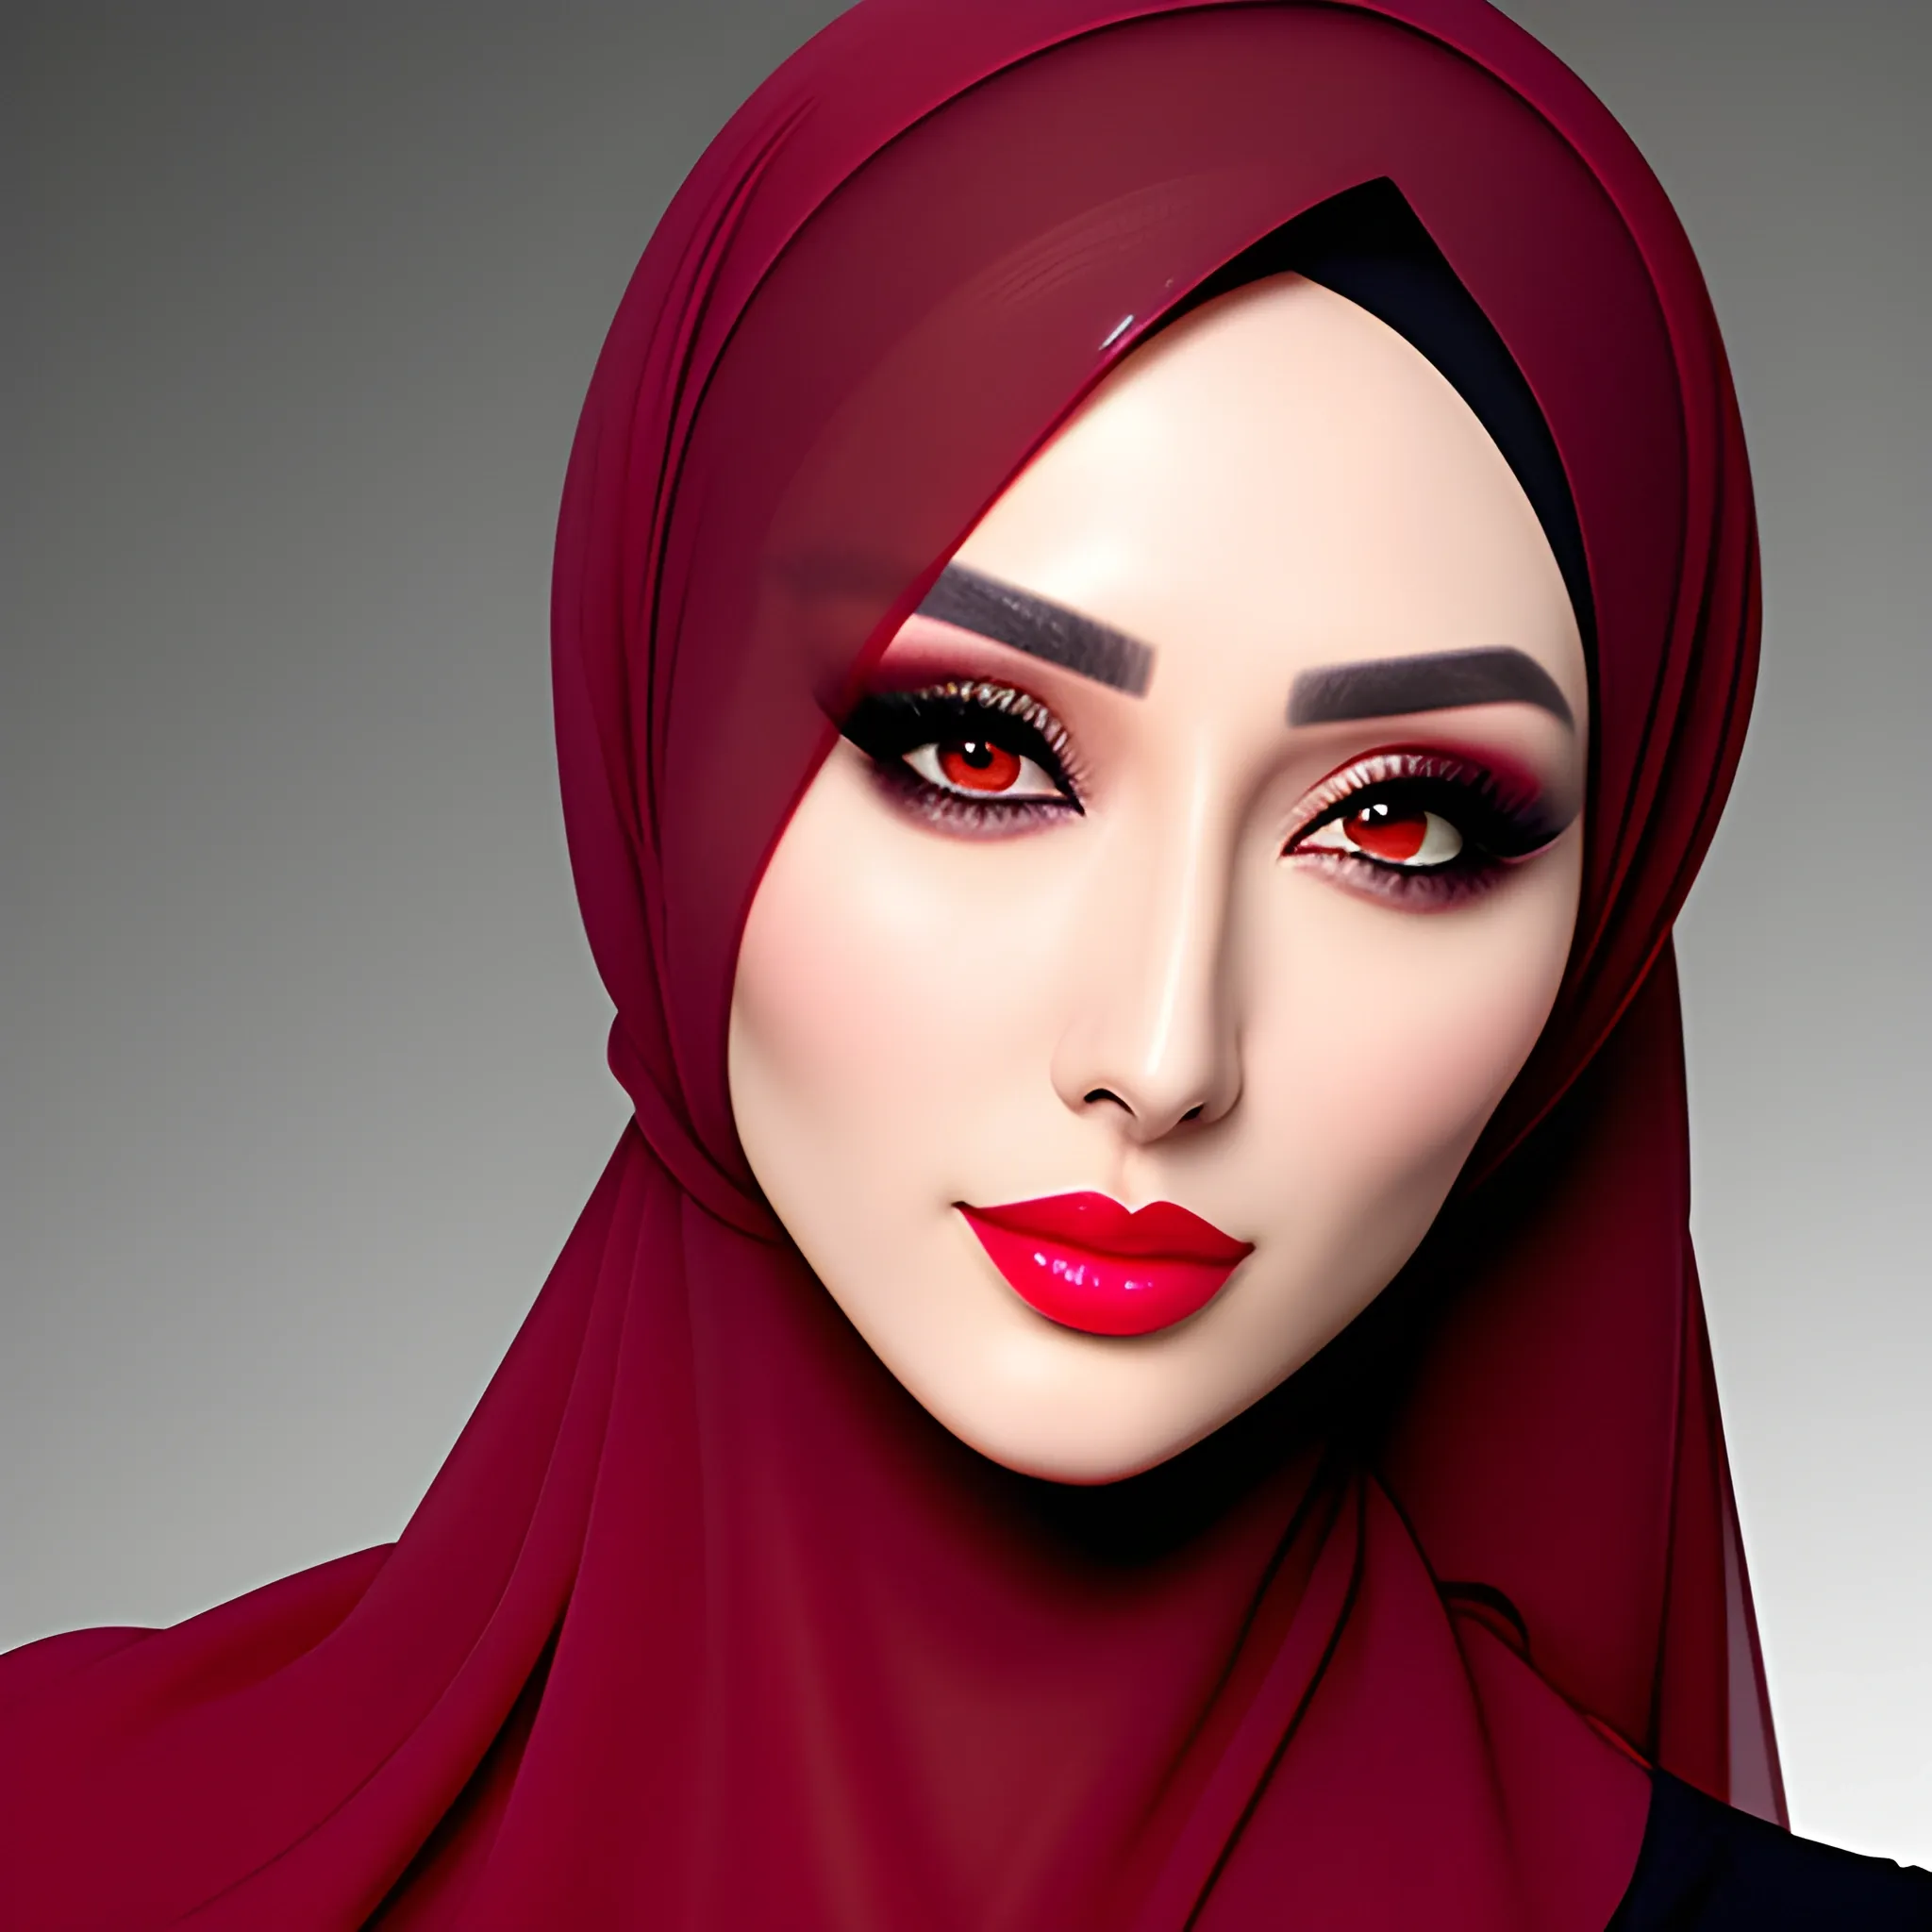 4k, best quality, hijab, 1girl, skinny figure, heavy makeup, sharp focus, soft lighting, hijab, red eyes